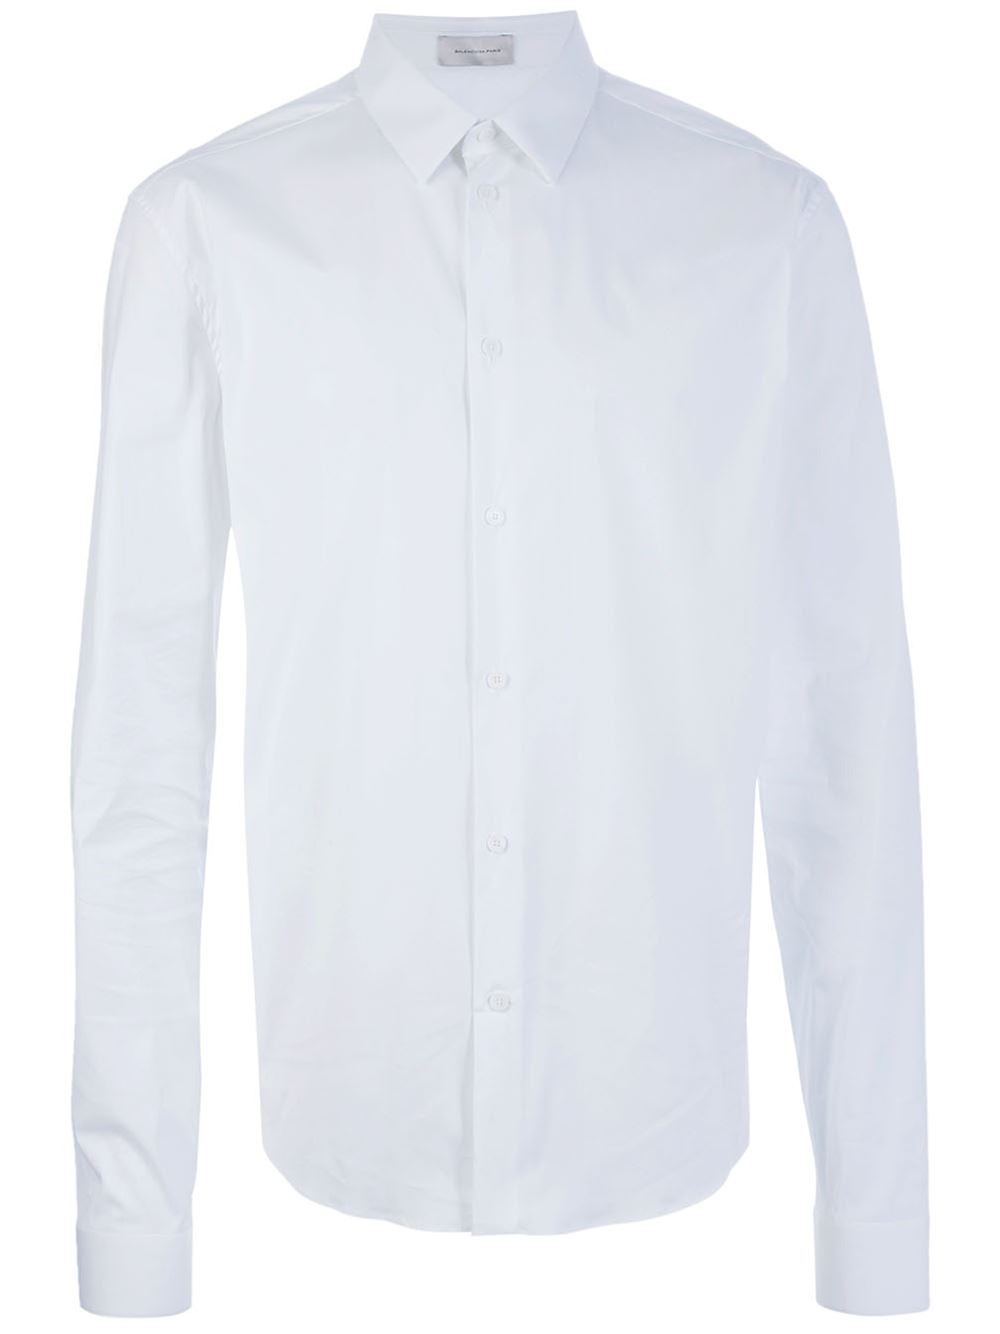 Lyst - Balenciaga Classic Shirt in White for Men